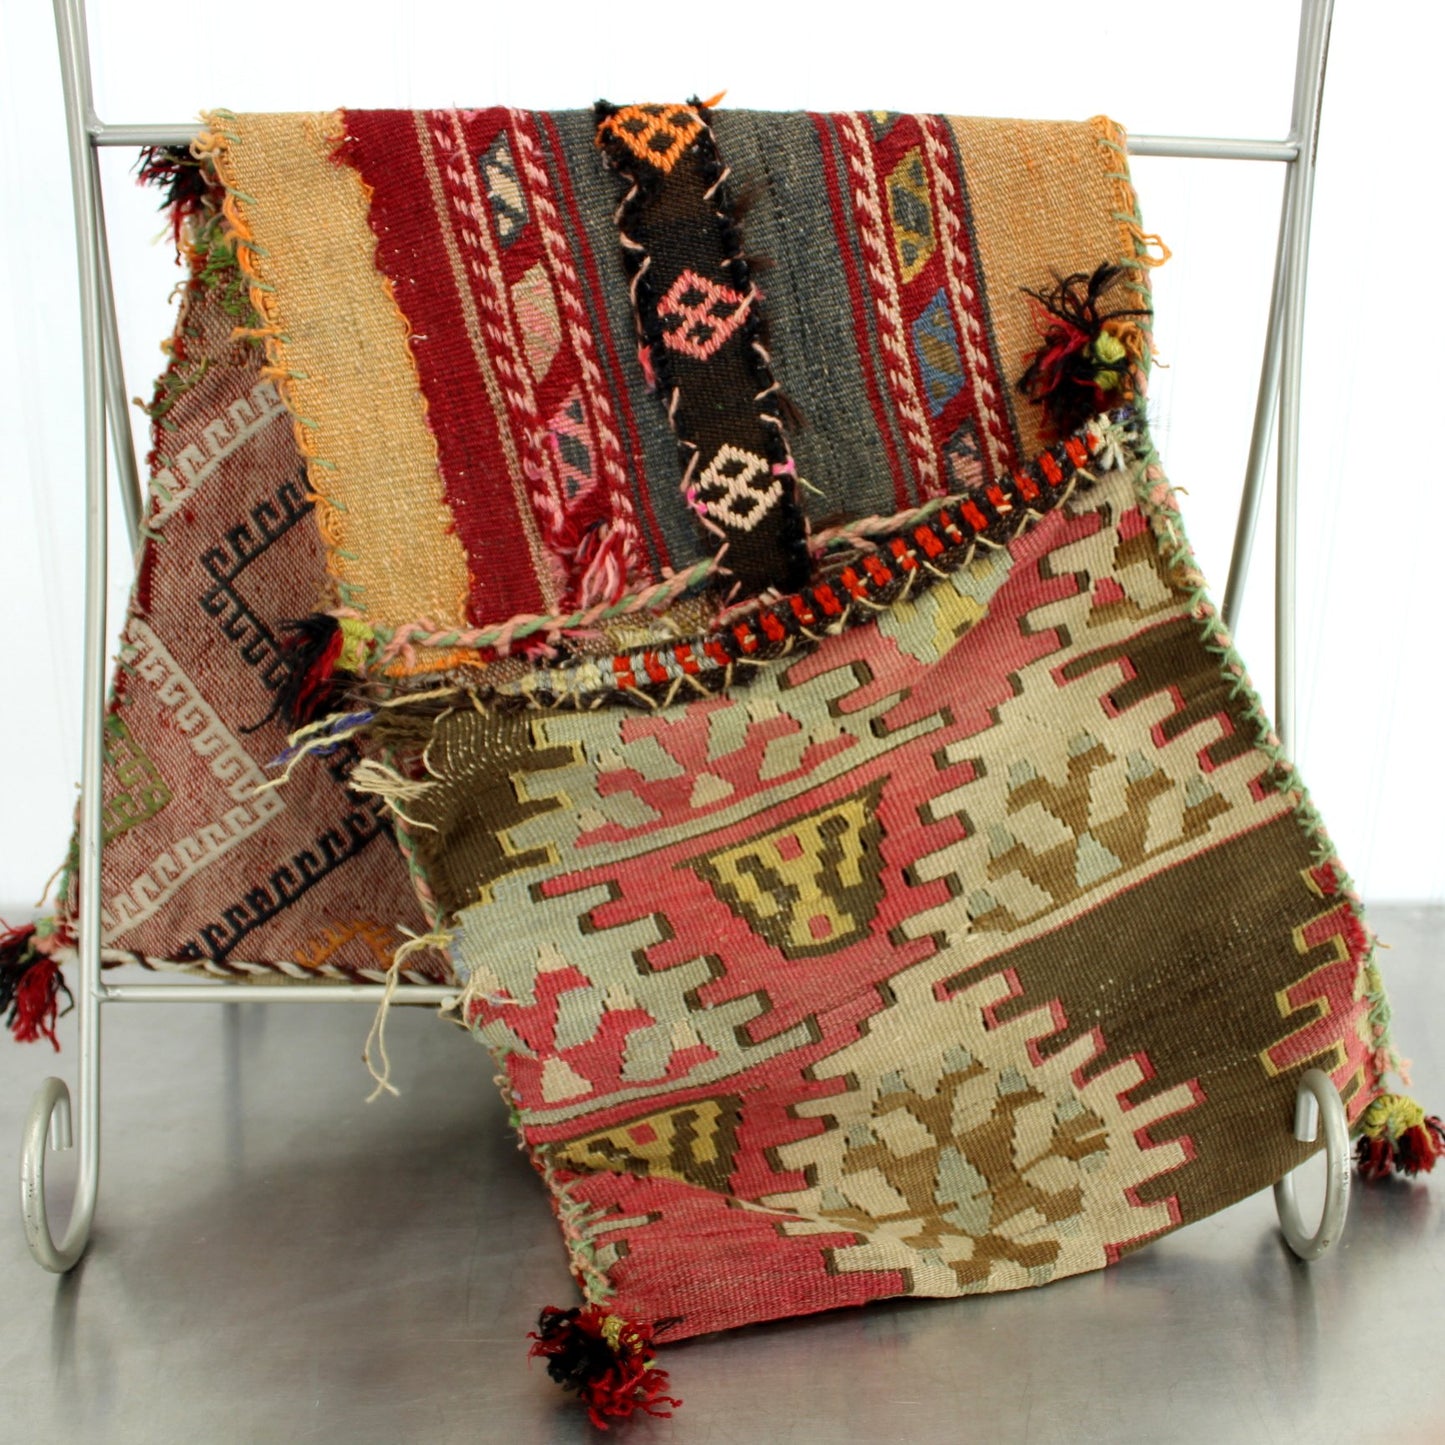 Old Camel Saddle Bag Kilim Hand Woven Used Shabby Authentic Decor Item  see loose corner of bag